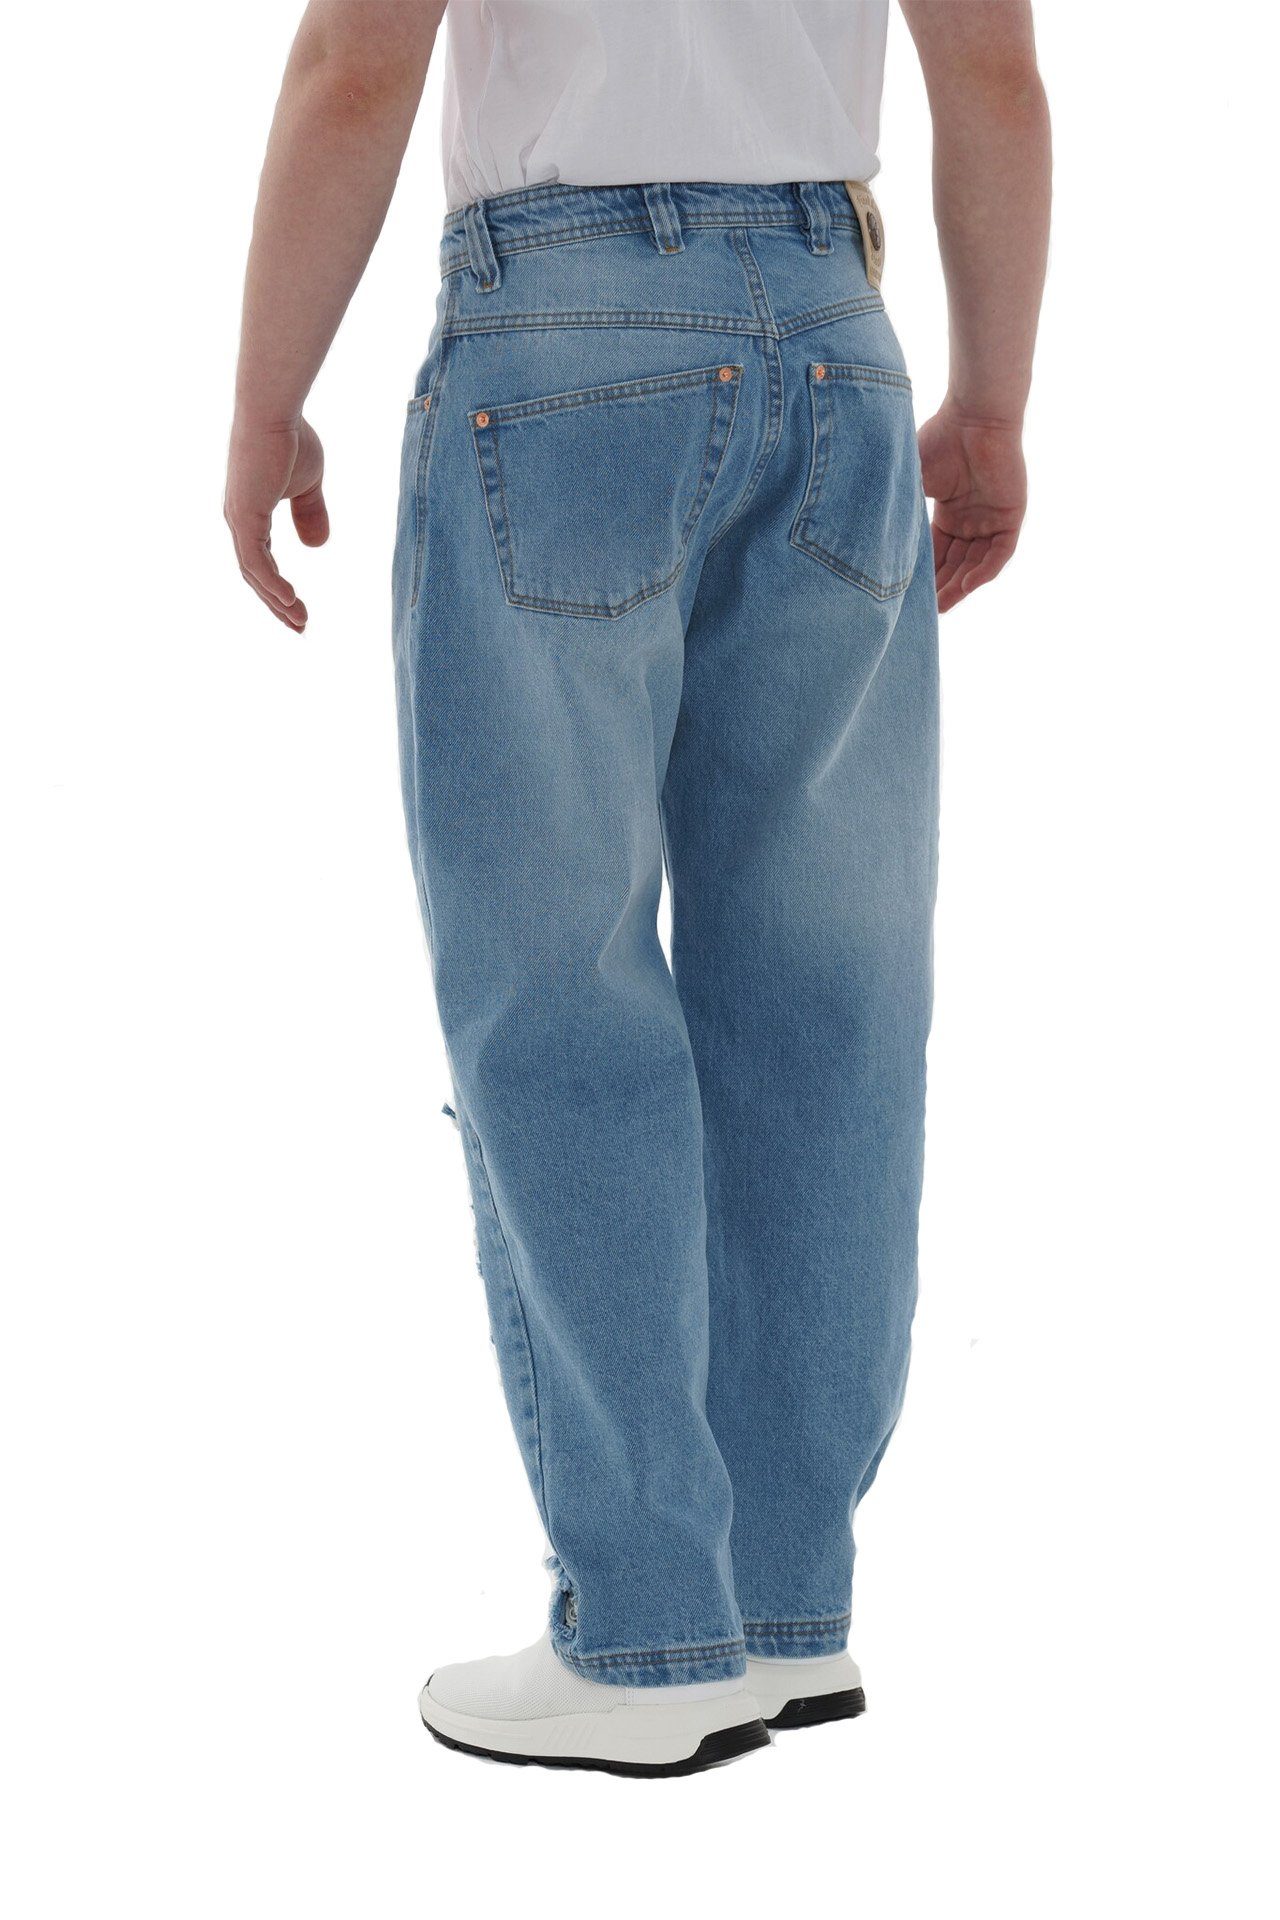 Jeans 471 Zicco Five Jeans Weite Loose PICALDI Raze Fit, Jeans Pocket